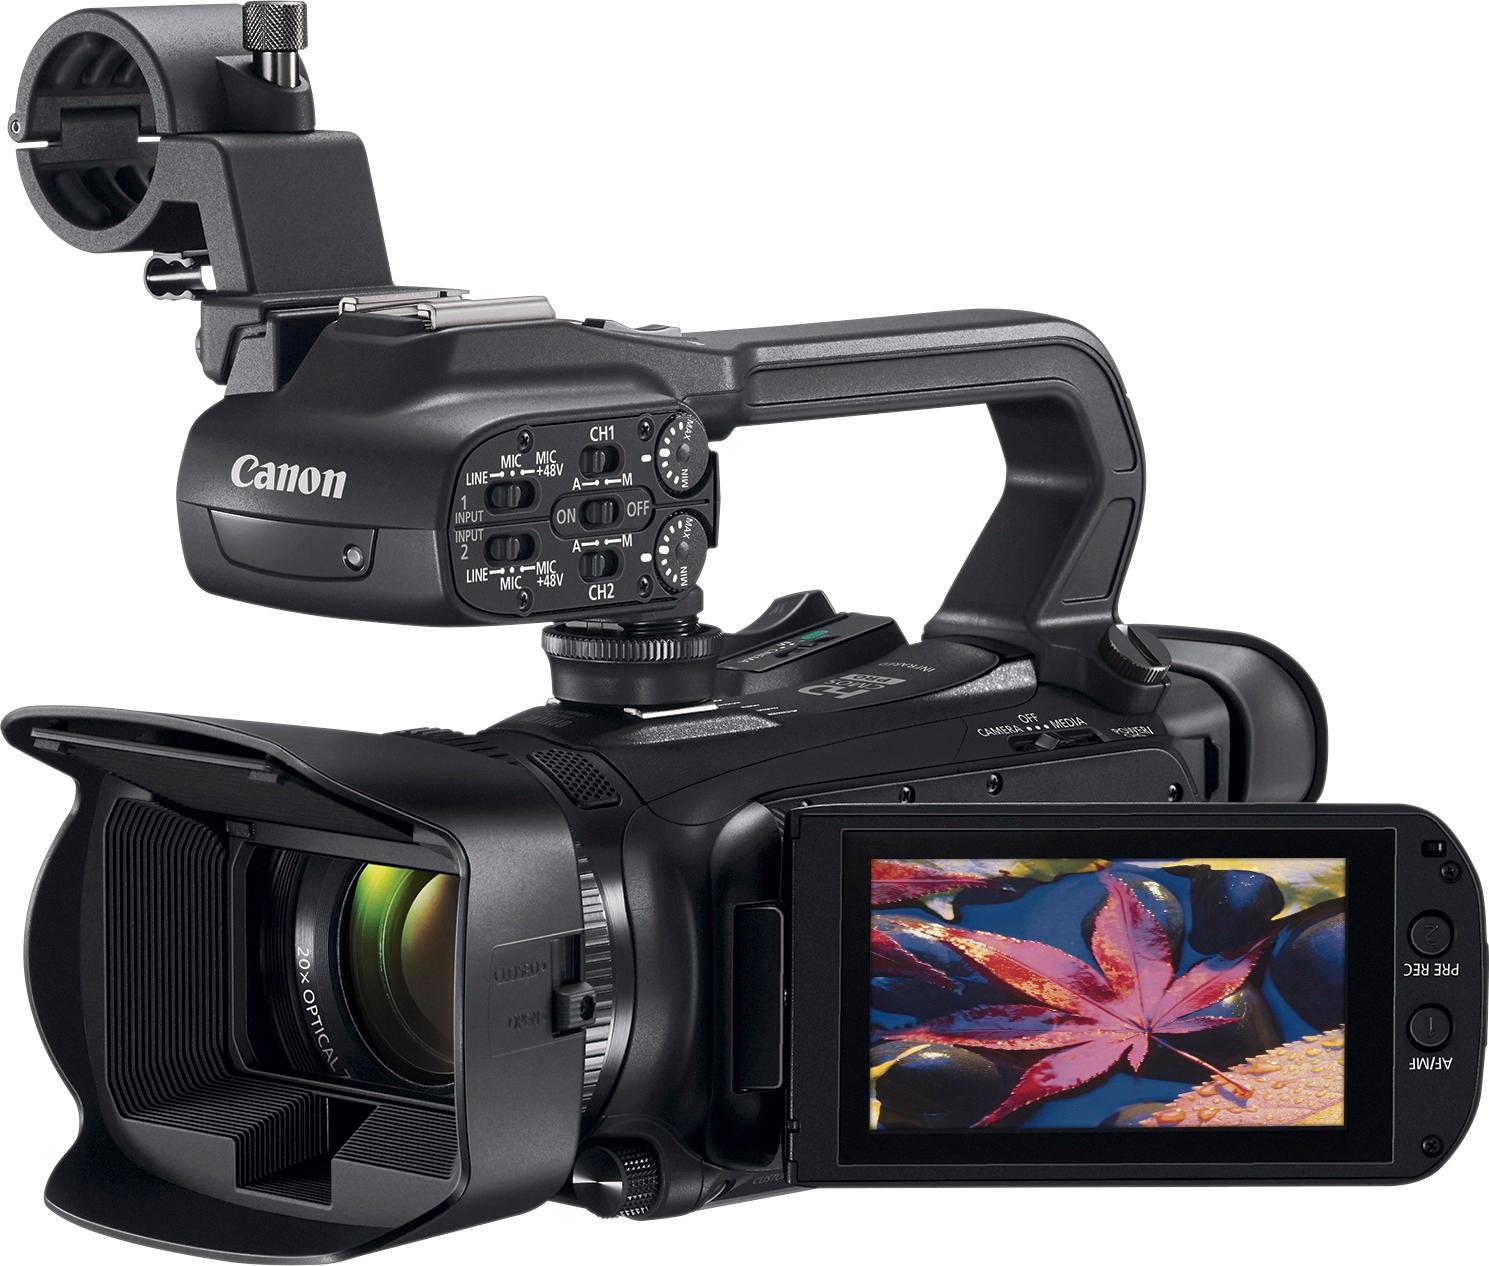 Angle View: Canon - XA11 HD Flash Memory Premium Camcorder - Black